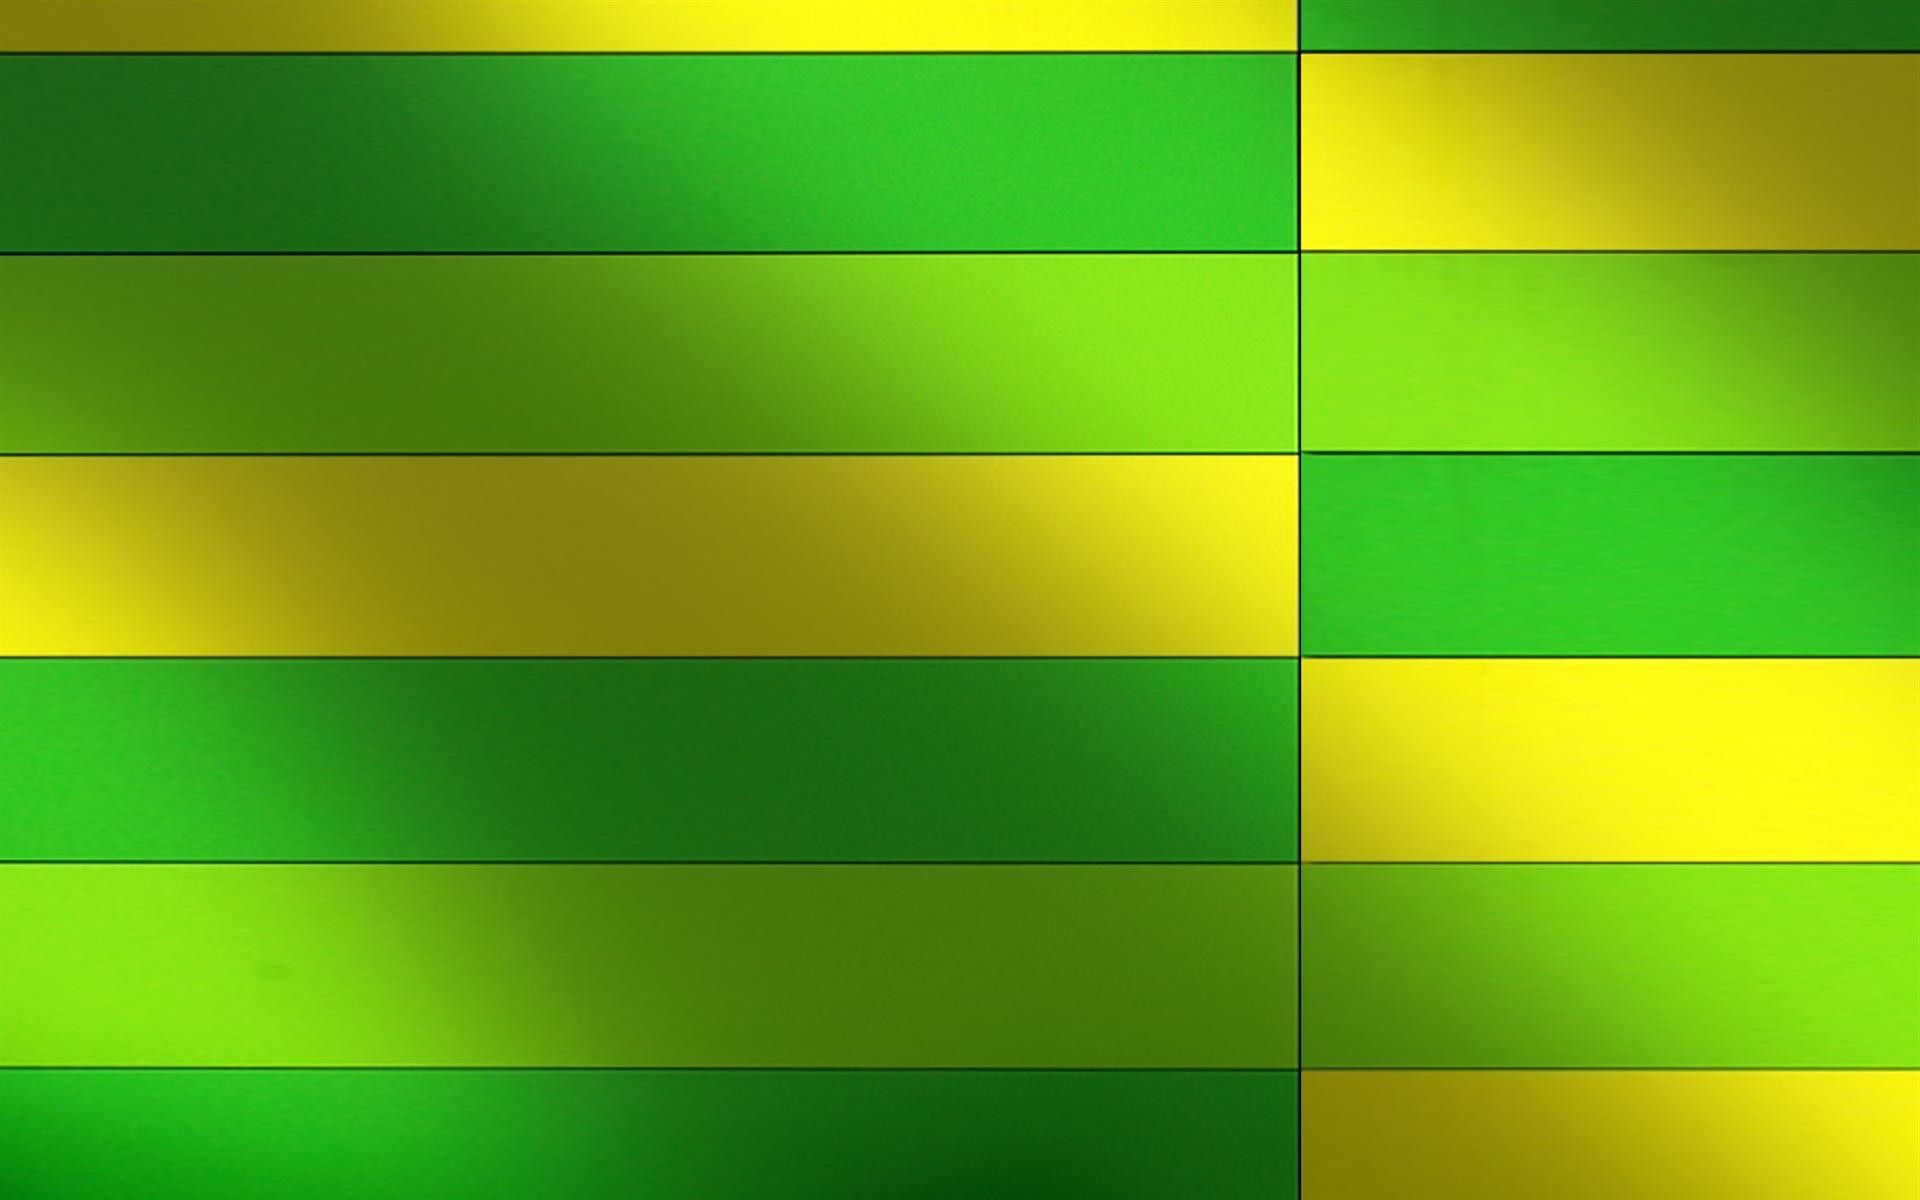 of Green 4K wallpaper for your desktop or mobile screen